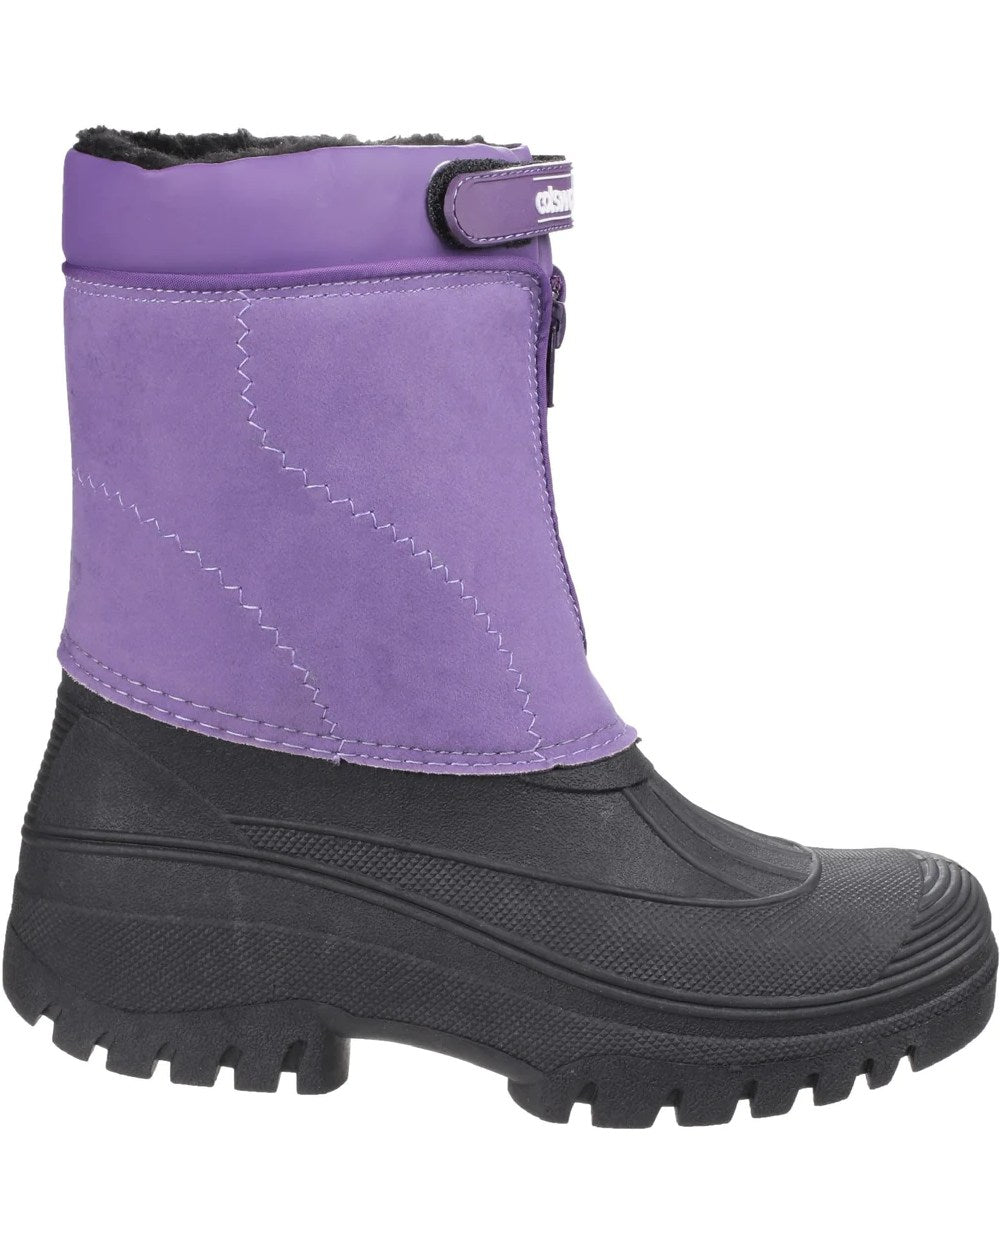 Cotswold Mens Venture Waterproof Winter Boots in Purple 